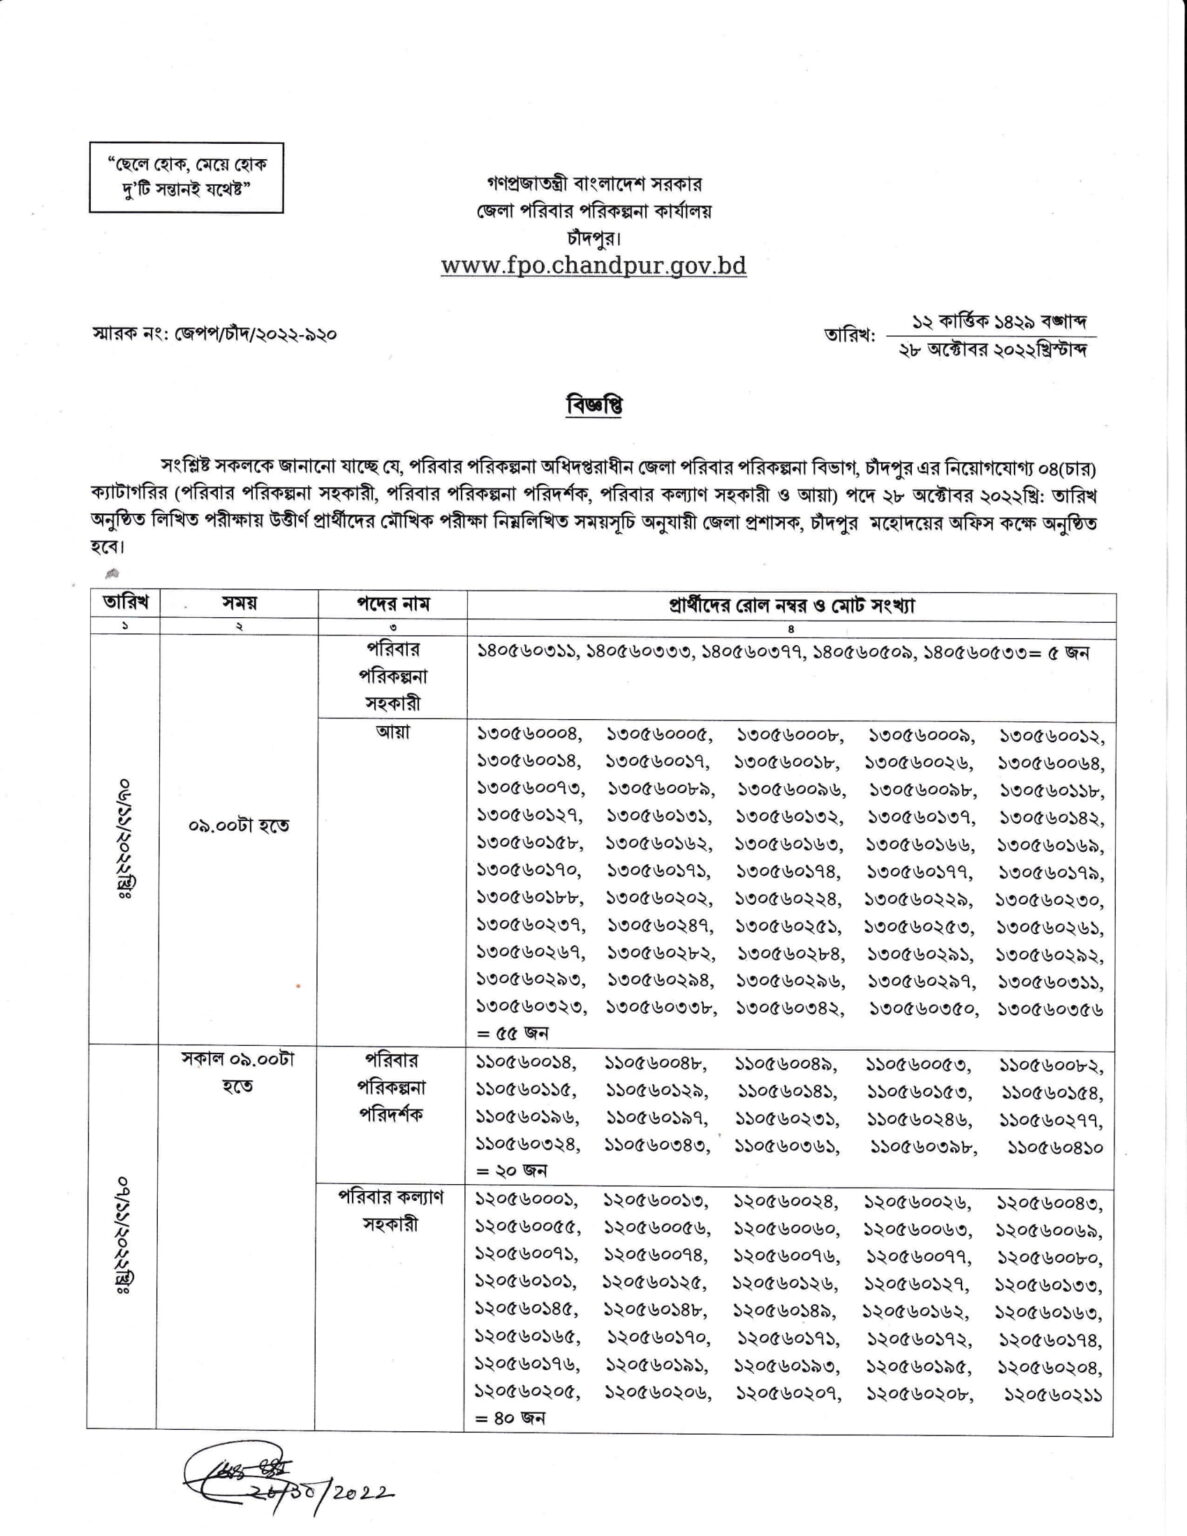 Family-Planning-Office-Chandpur-Exam-Result-2022-PDF-1-1187x1536